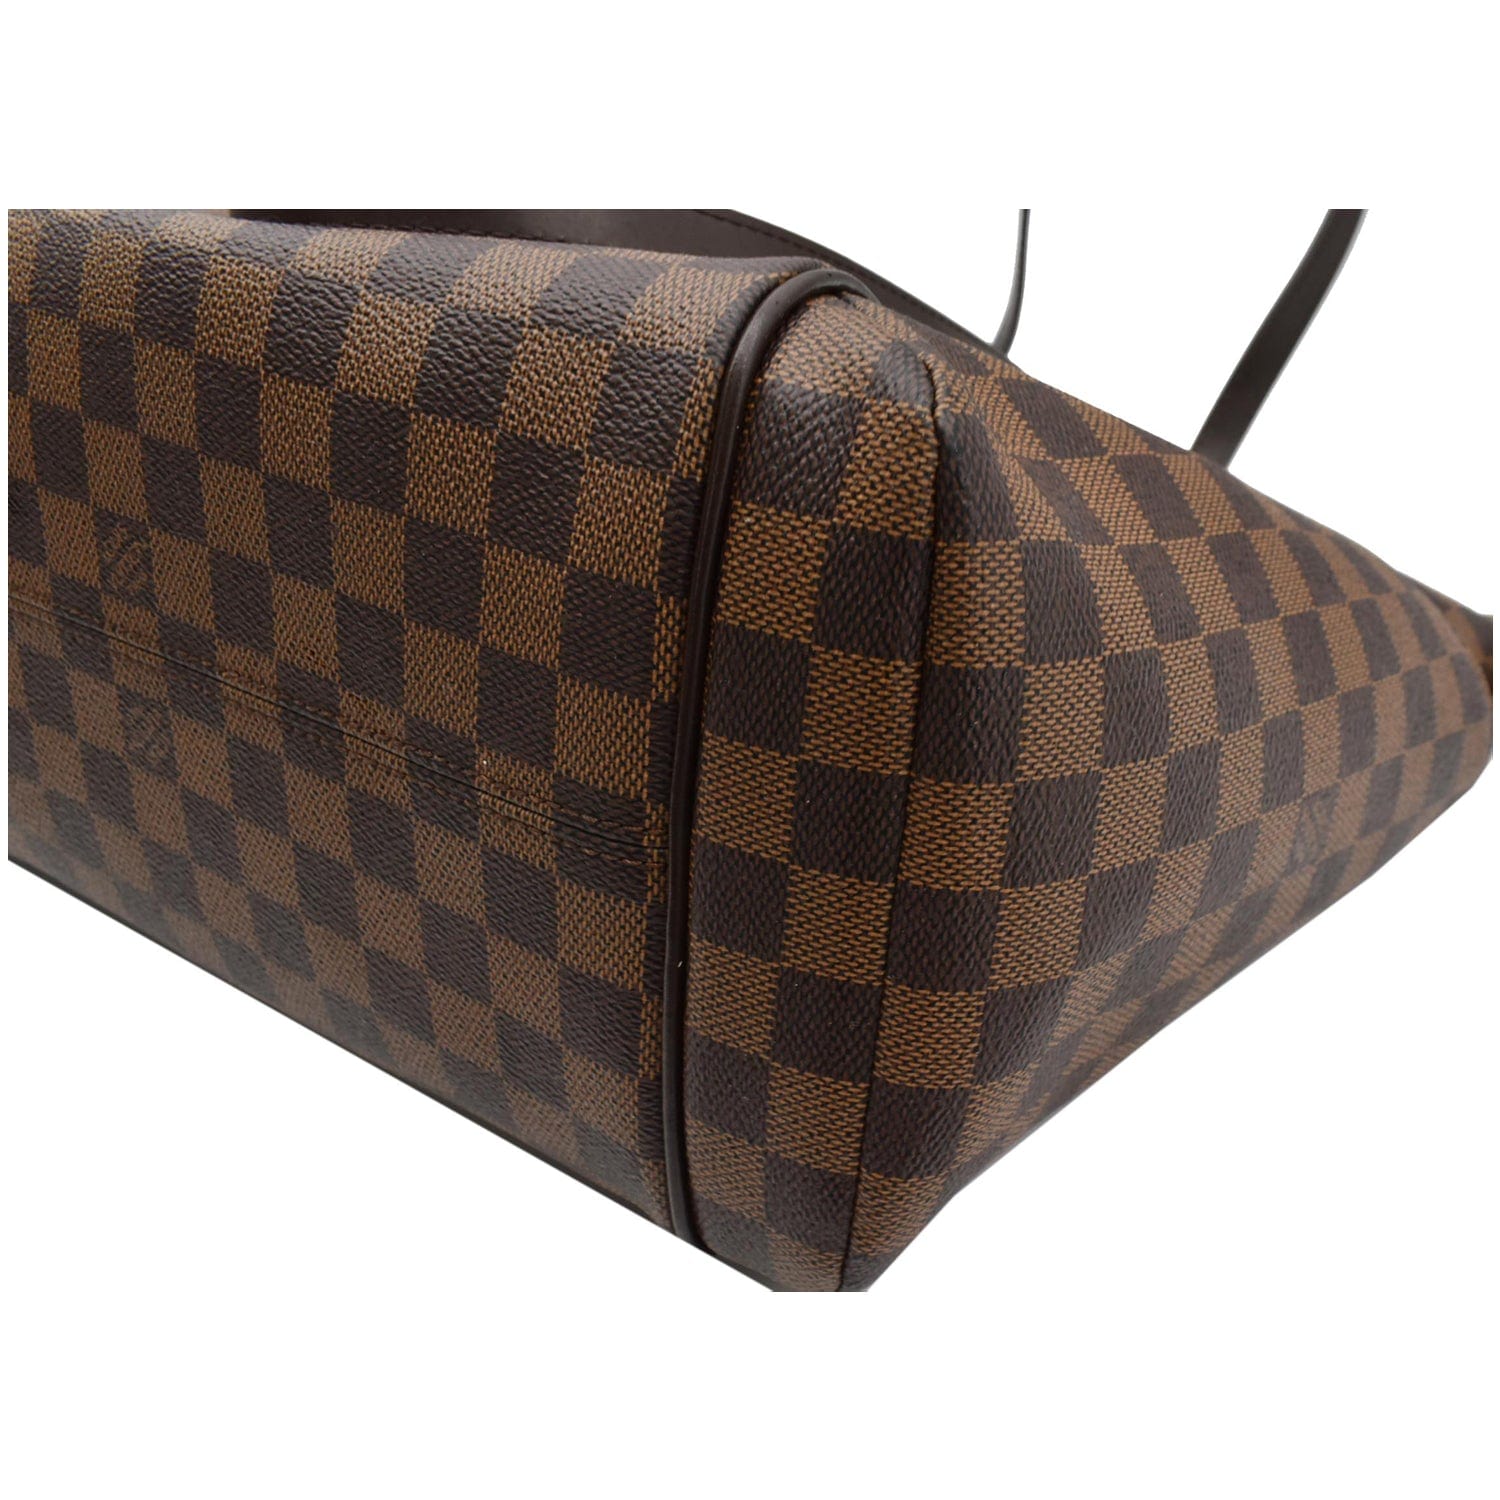 Louis Vuitton Damier Ebene Totally MM - Brown Totes, Handbags